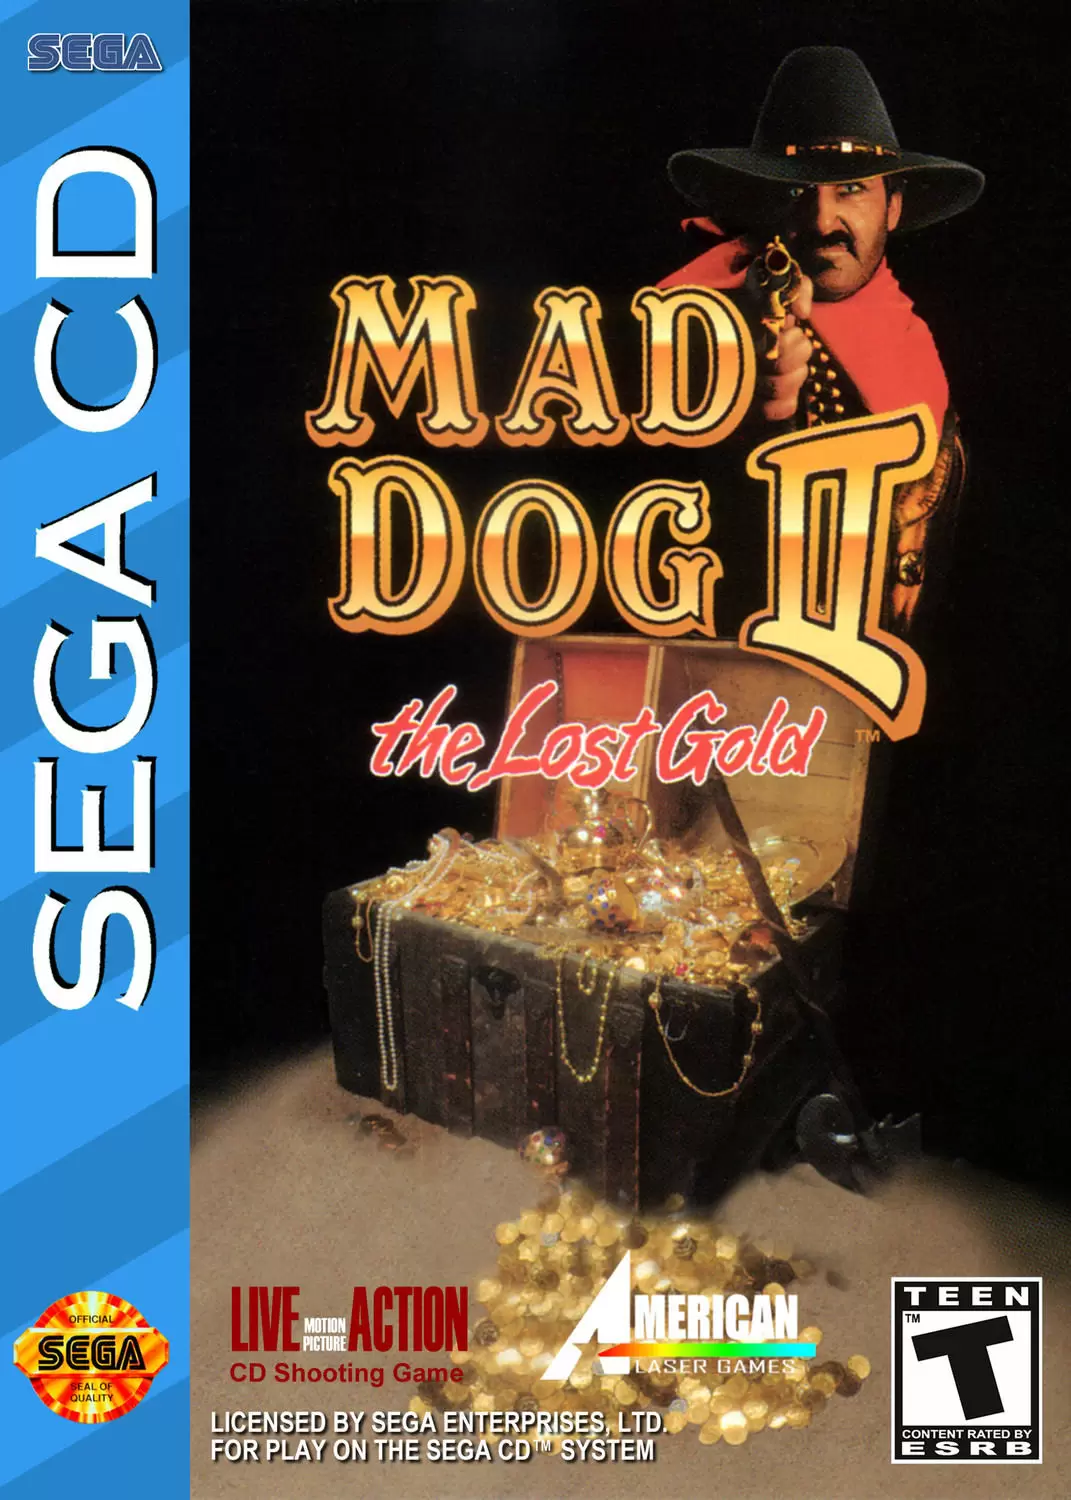 SEGA Mega CD Games - Mad Dog II: The Lost Gold